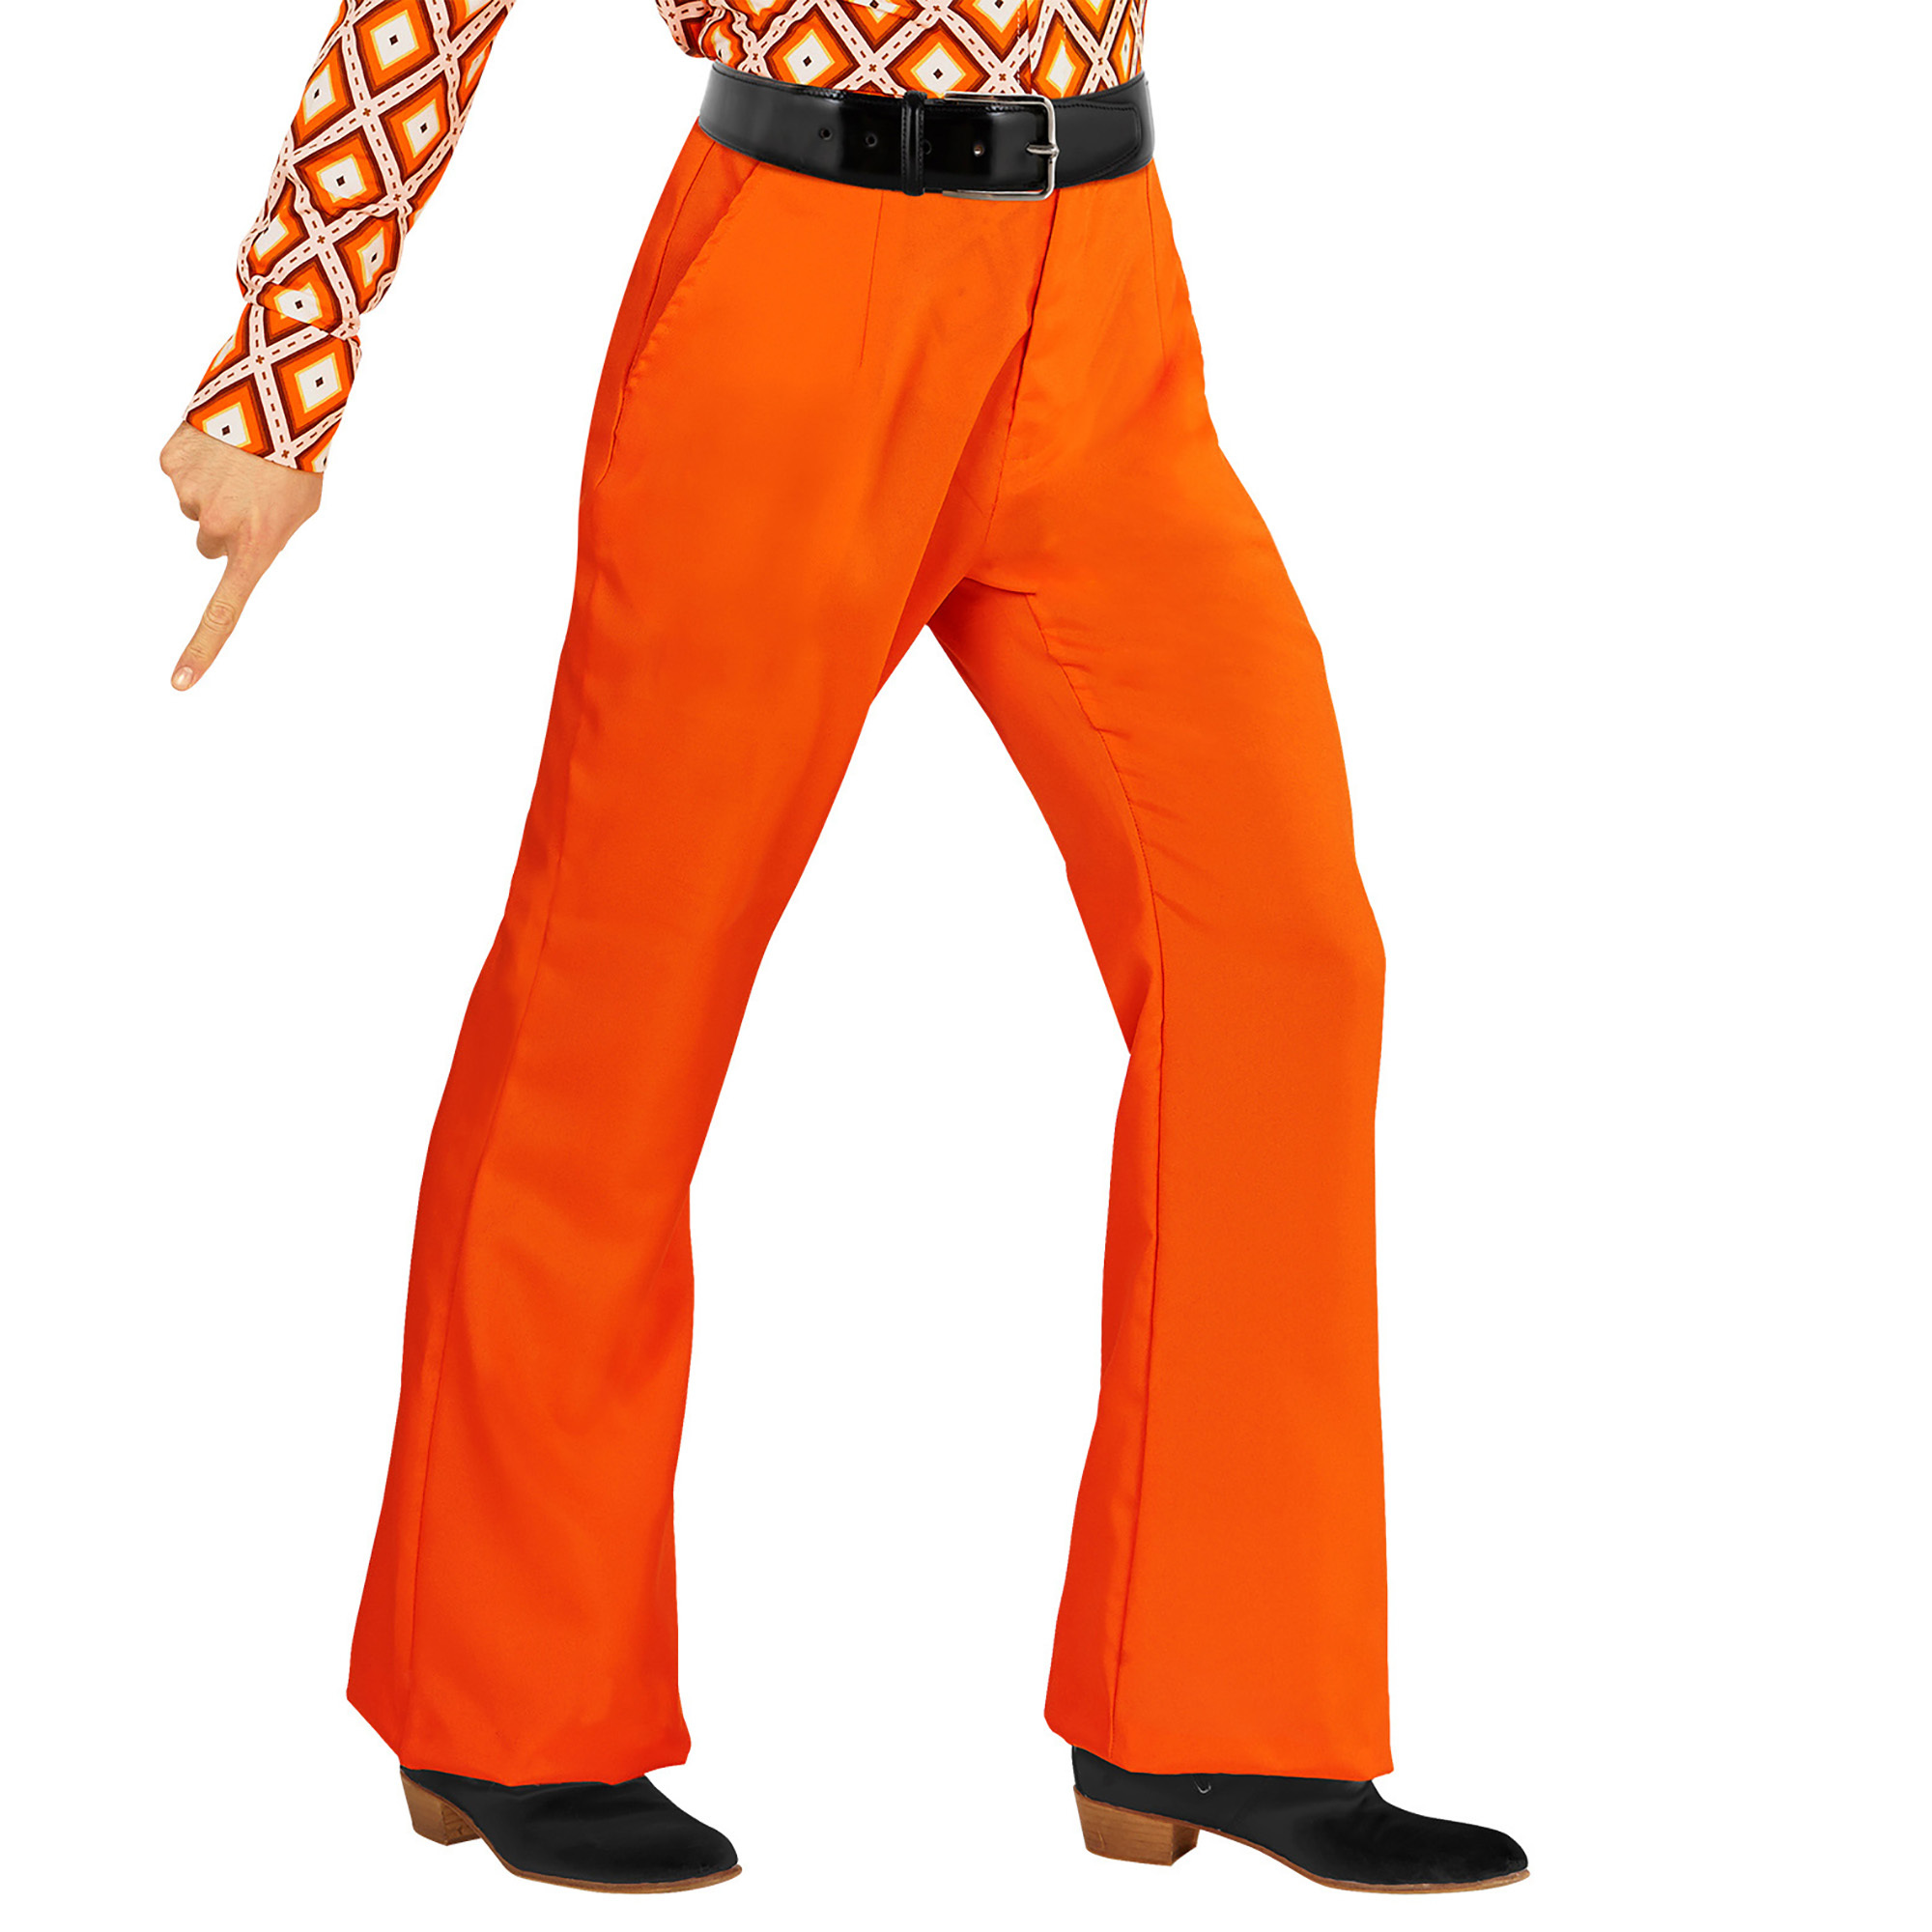 70's Disco broek heren oranje 70e jaren 